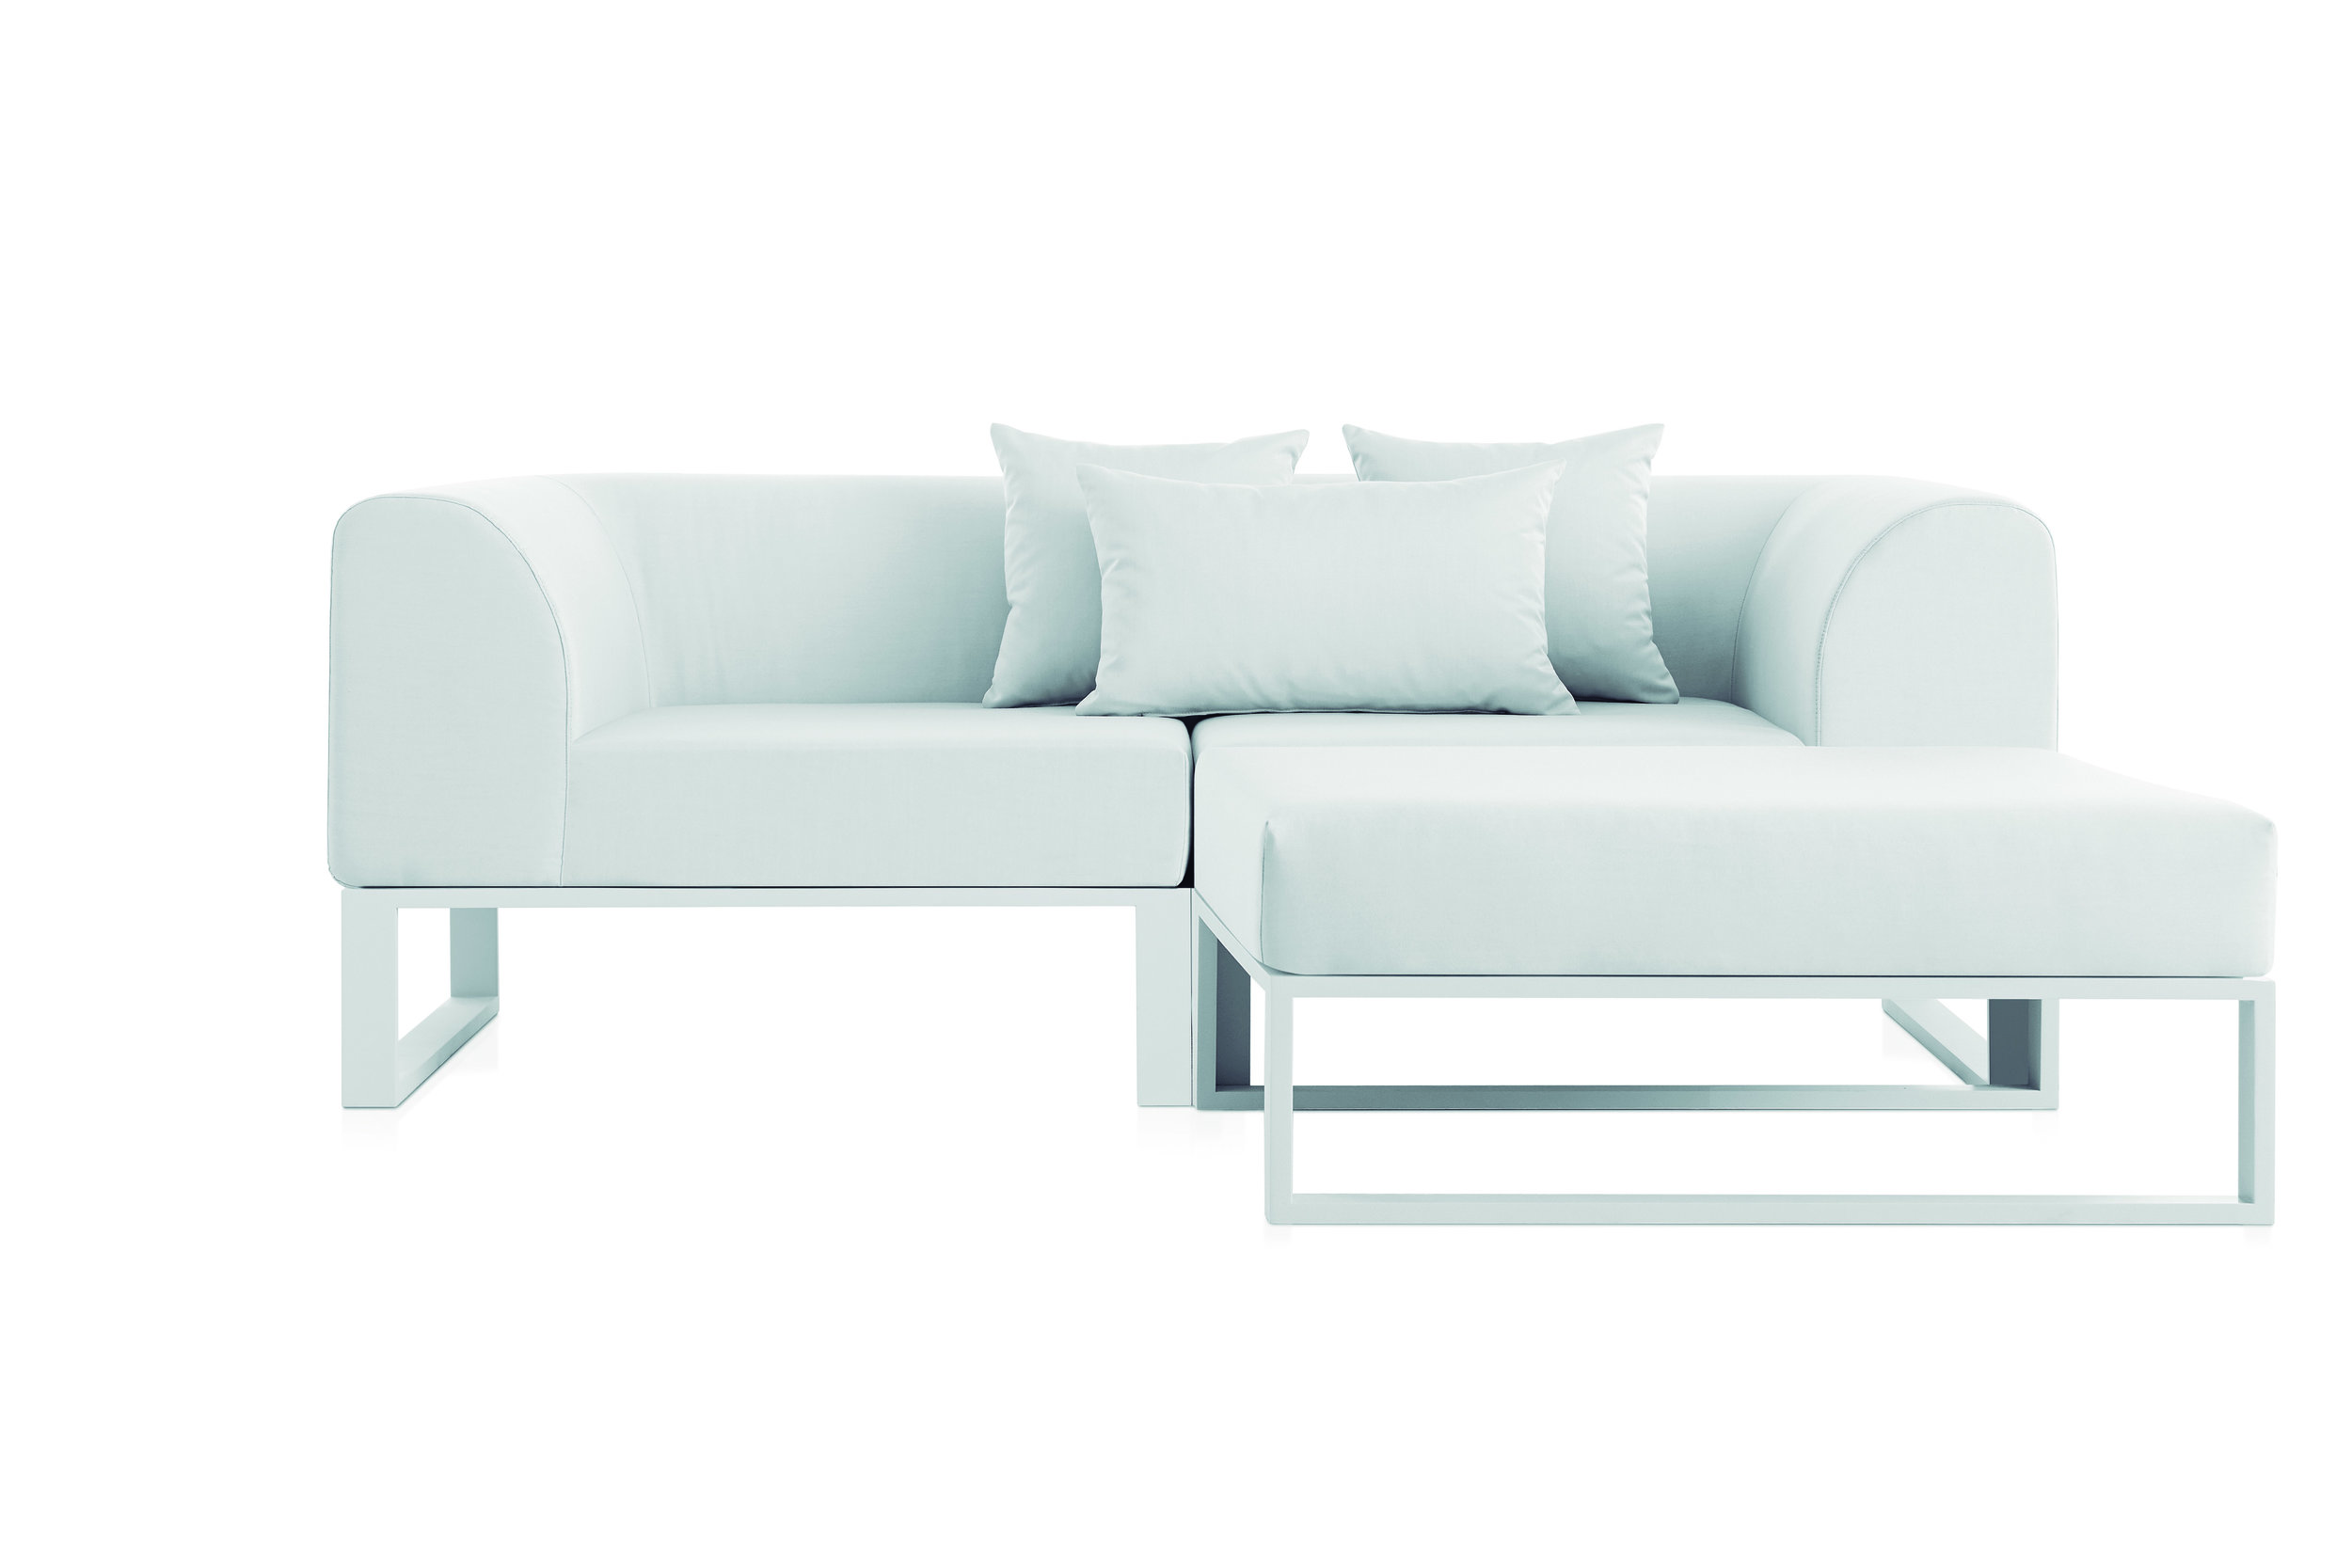 Ploid sofa modular lounger 2p white.jpg